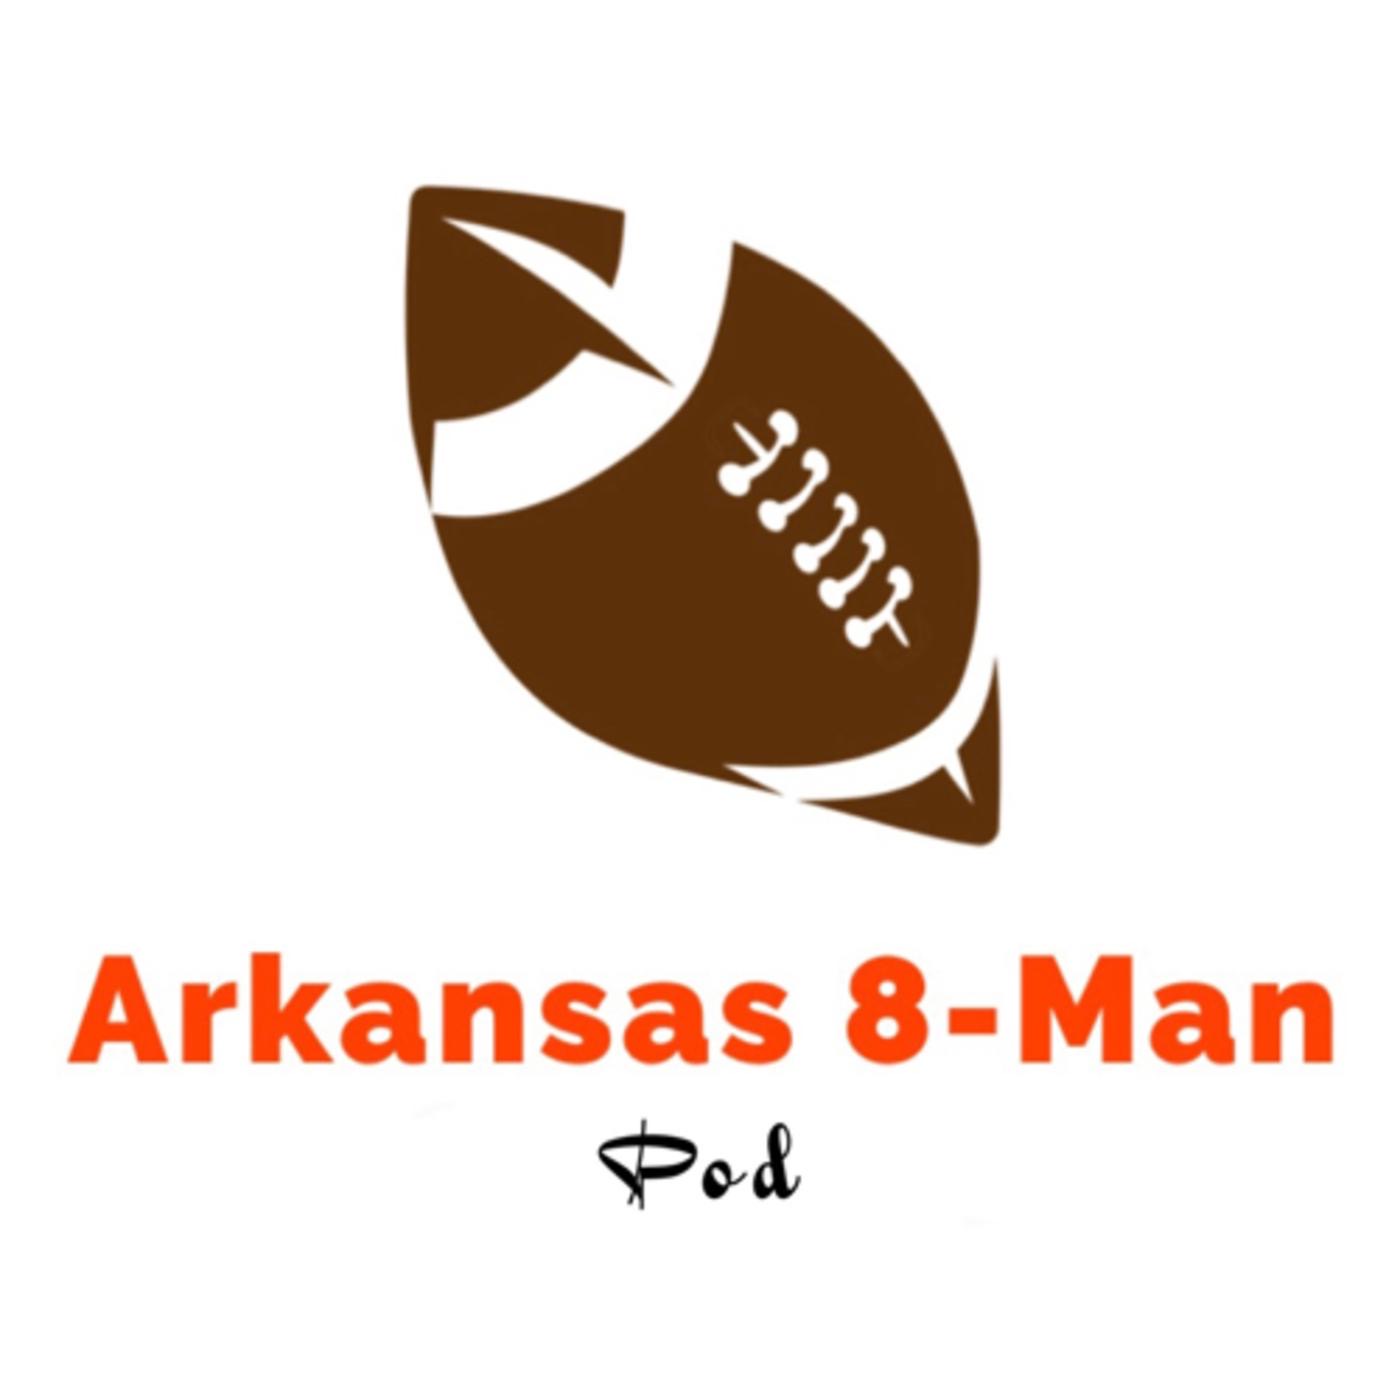 Arkansas 8-Man Pod Episode 3